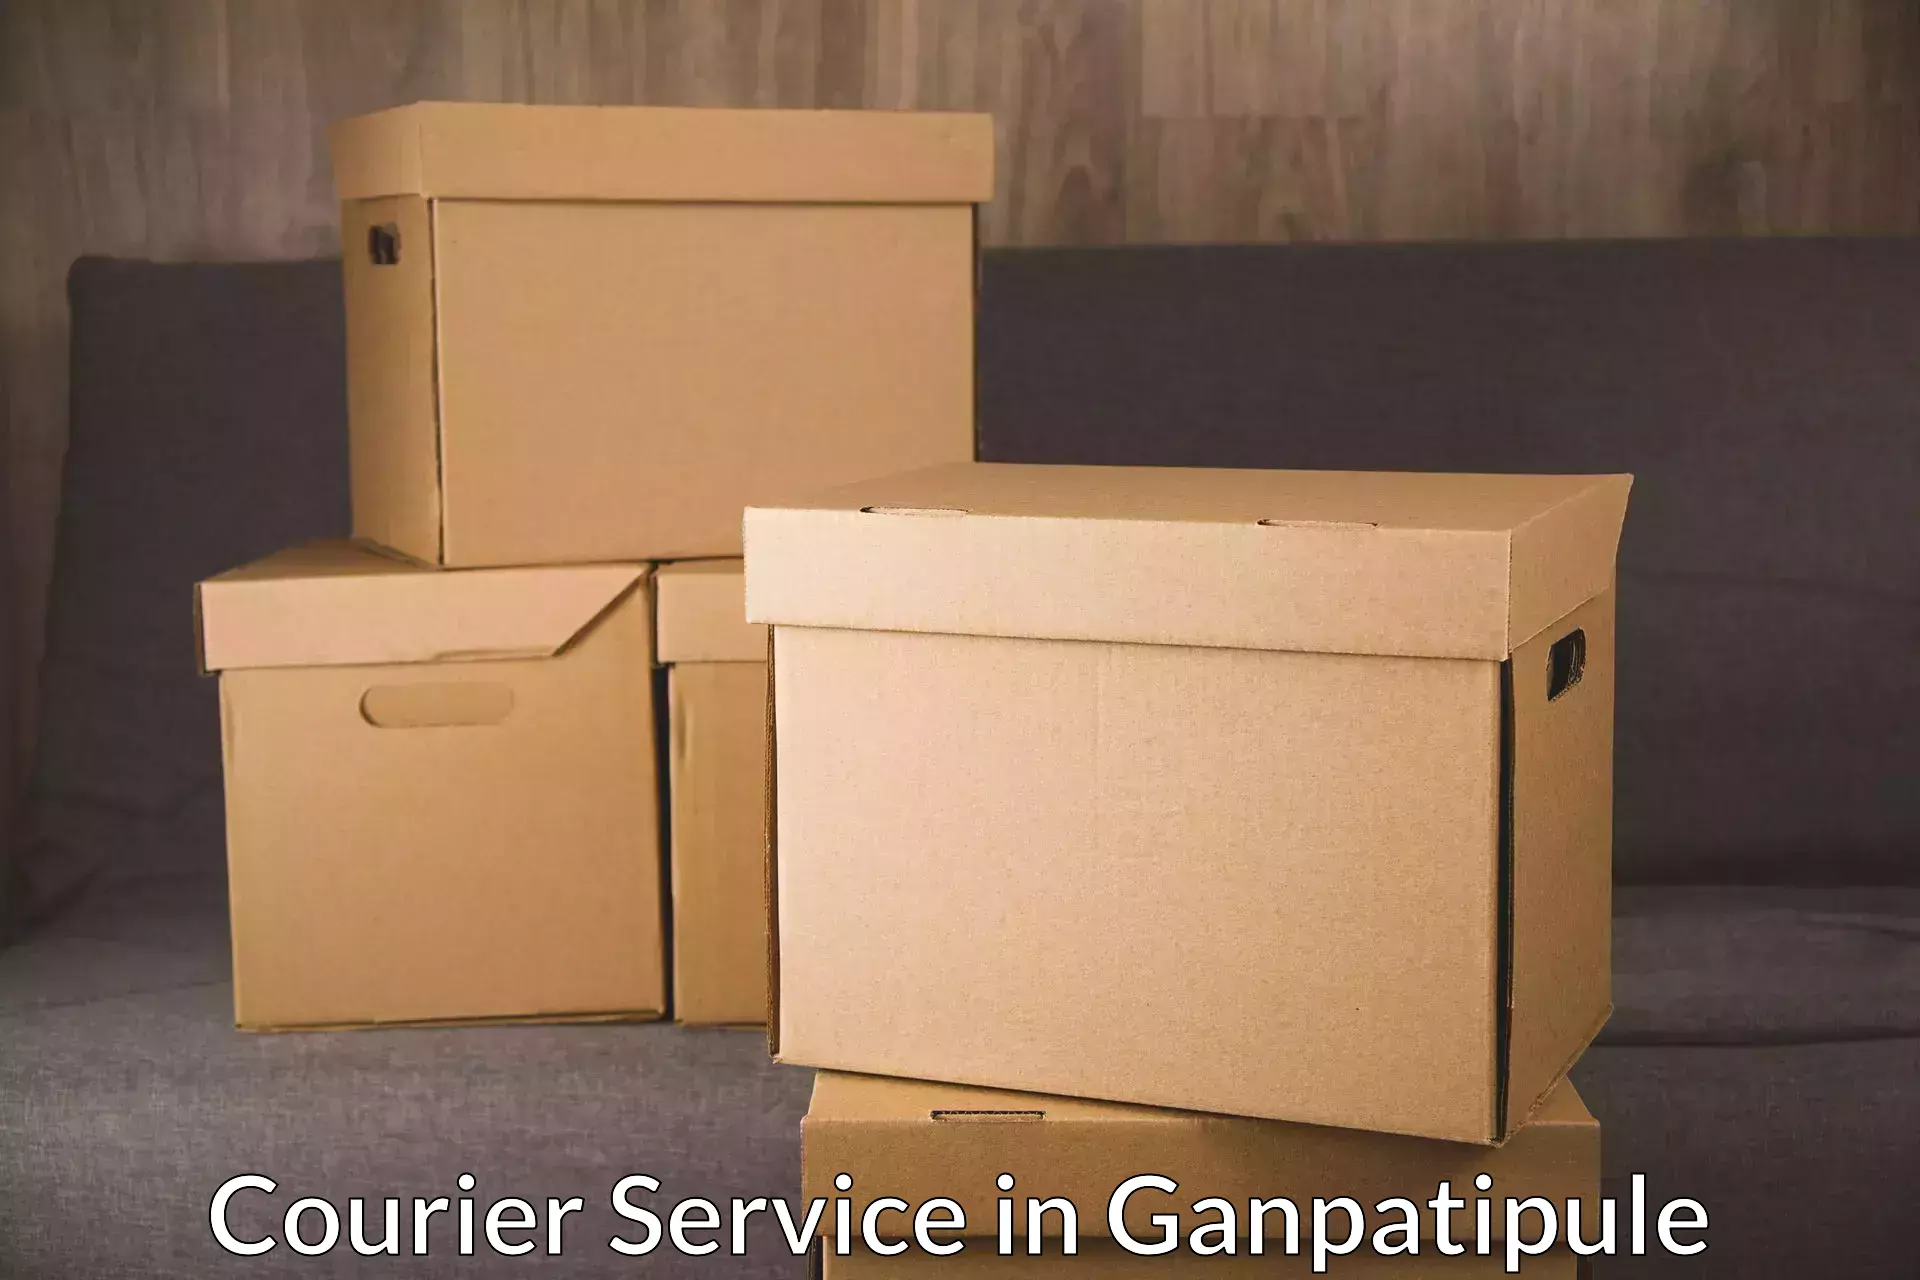 Courier service efficiency in Ganpatipule